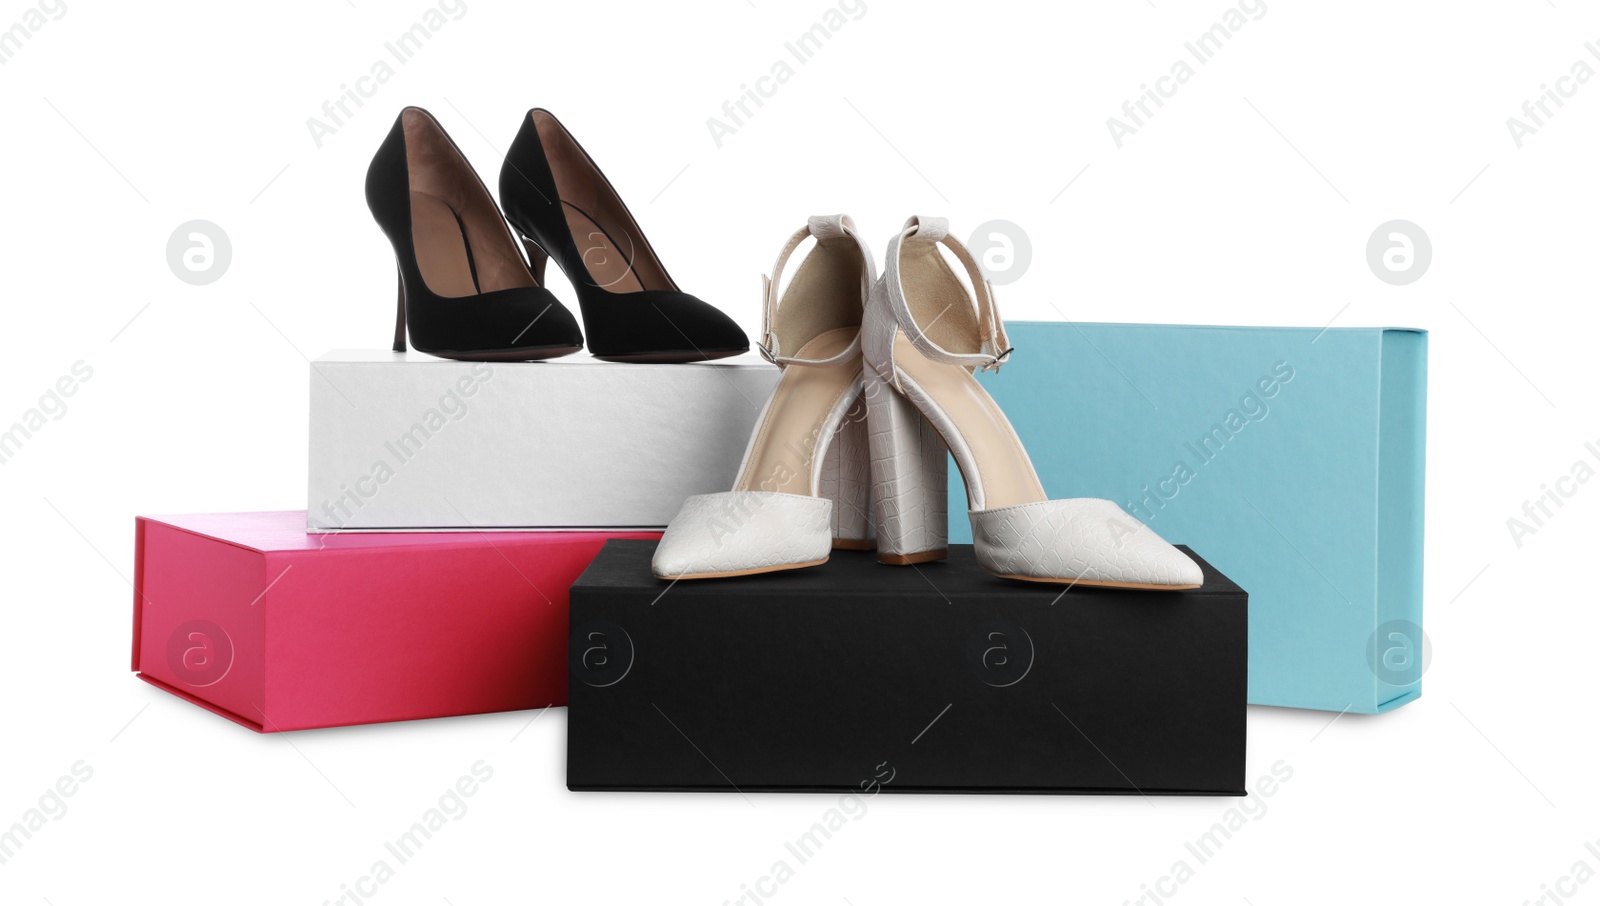 Photo of Stylish shoes and boxes on white background